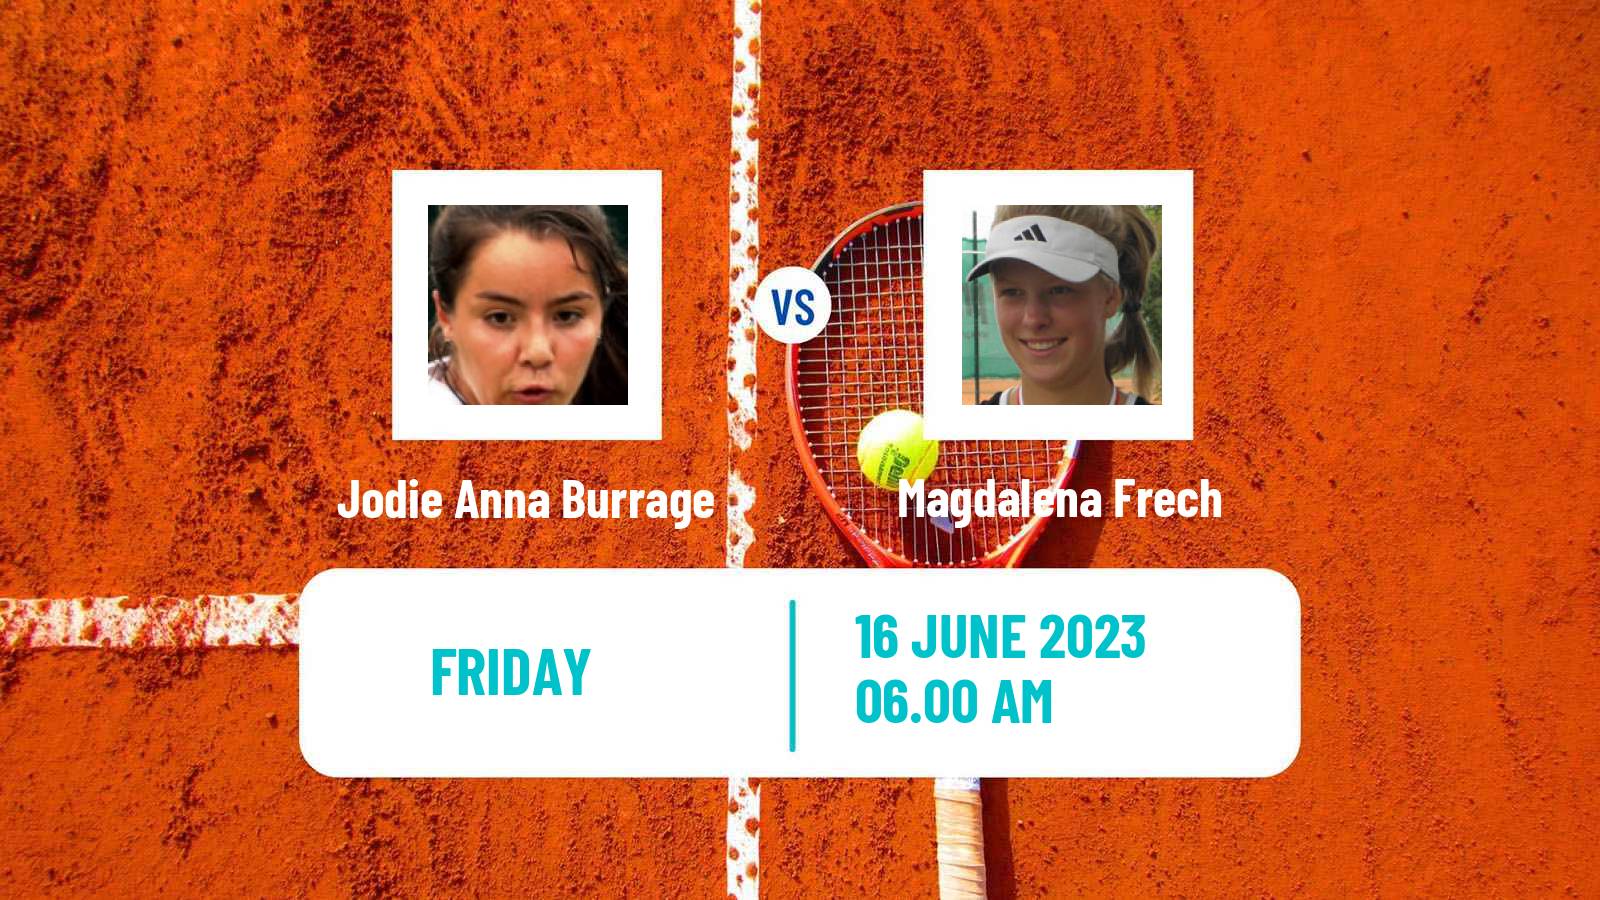 Tennis WTA Nottingham Jodie Anna Burrage - Magdalena Frech